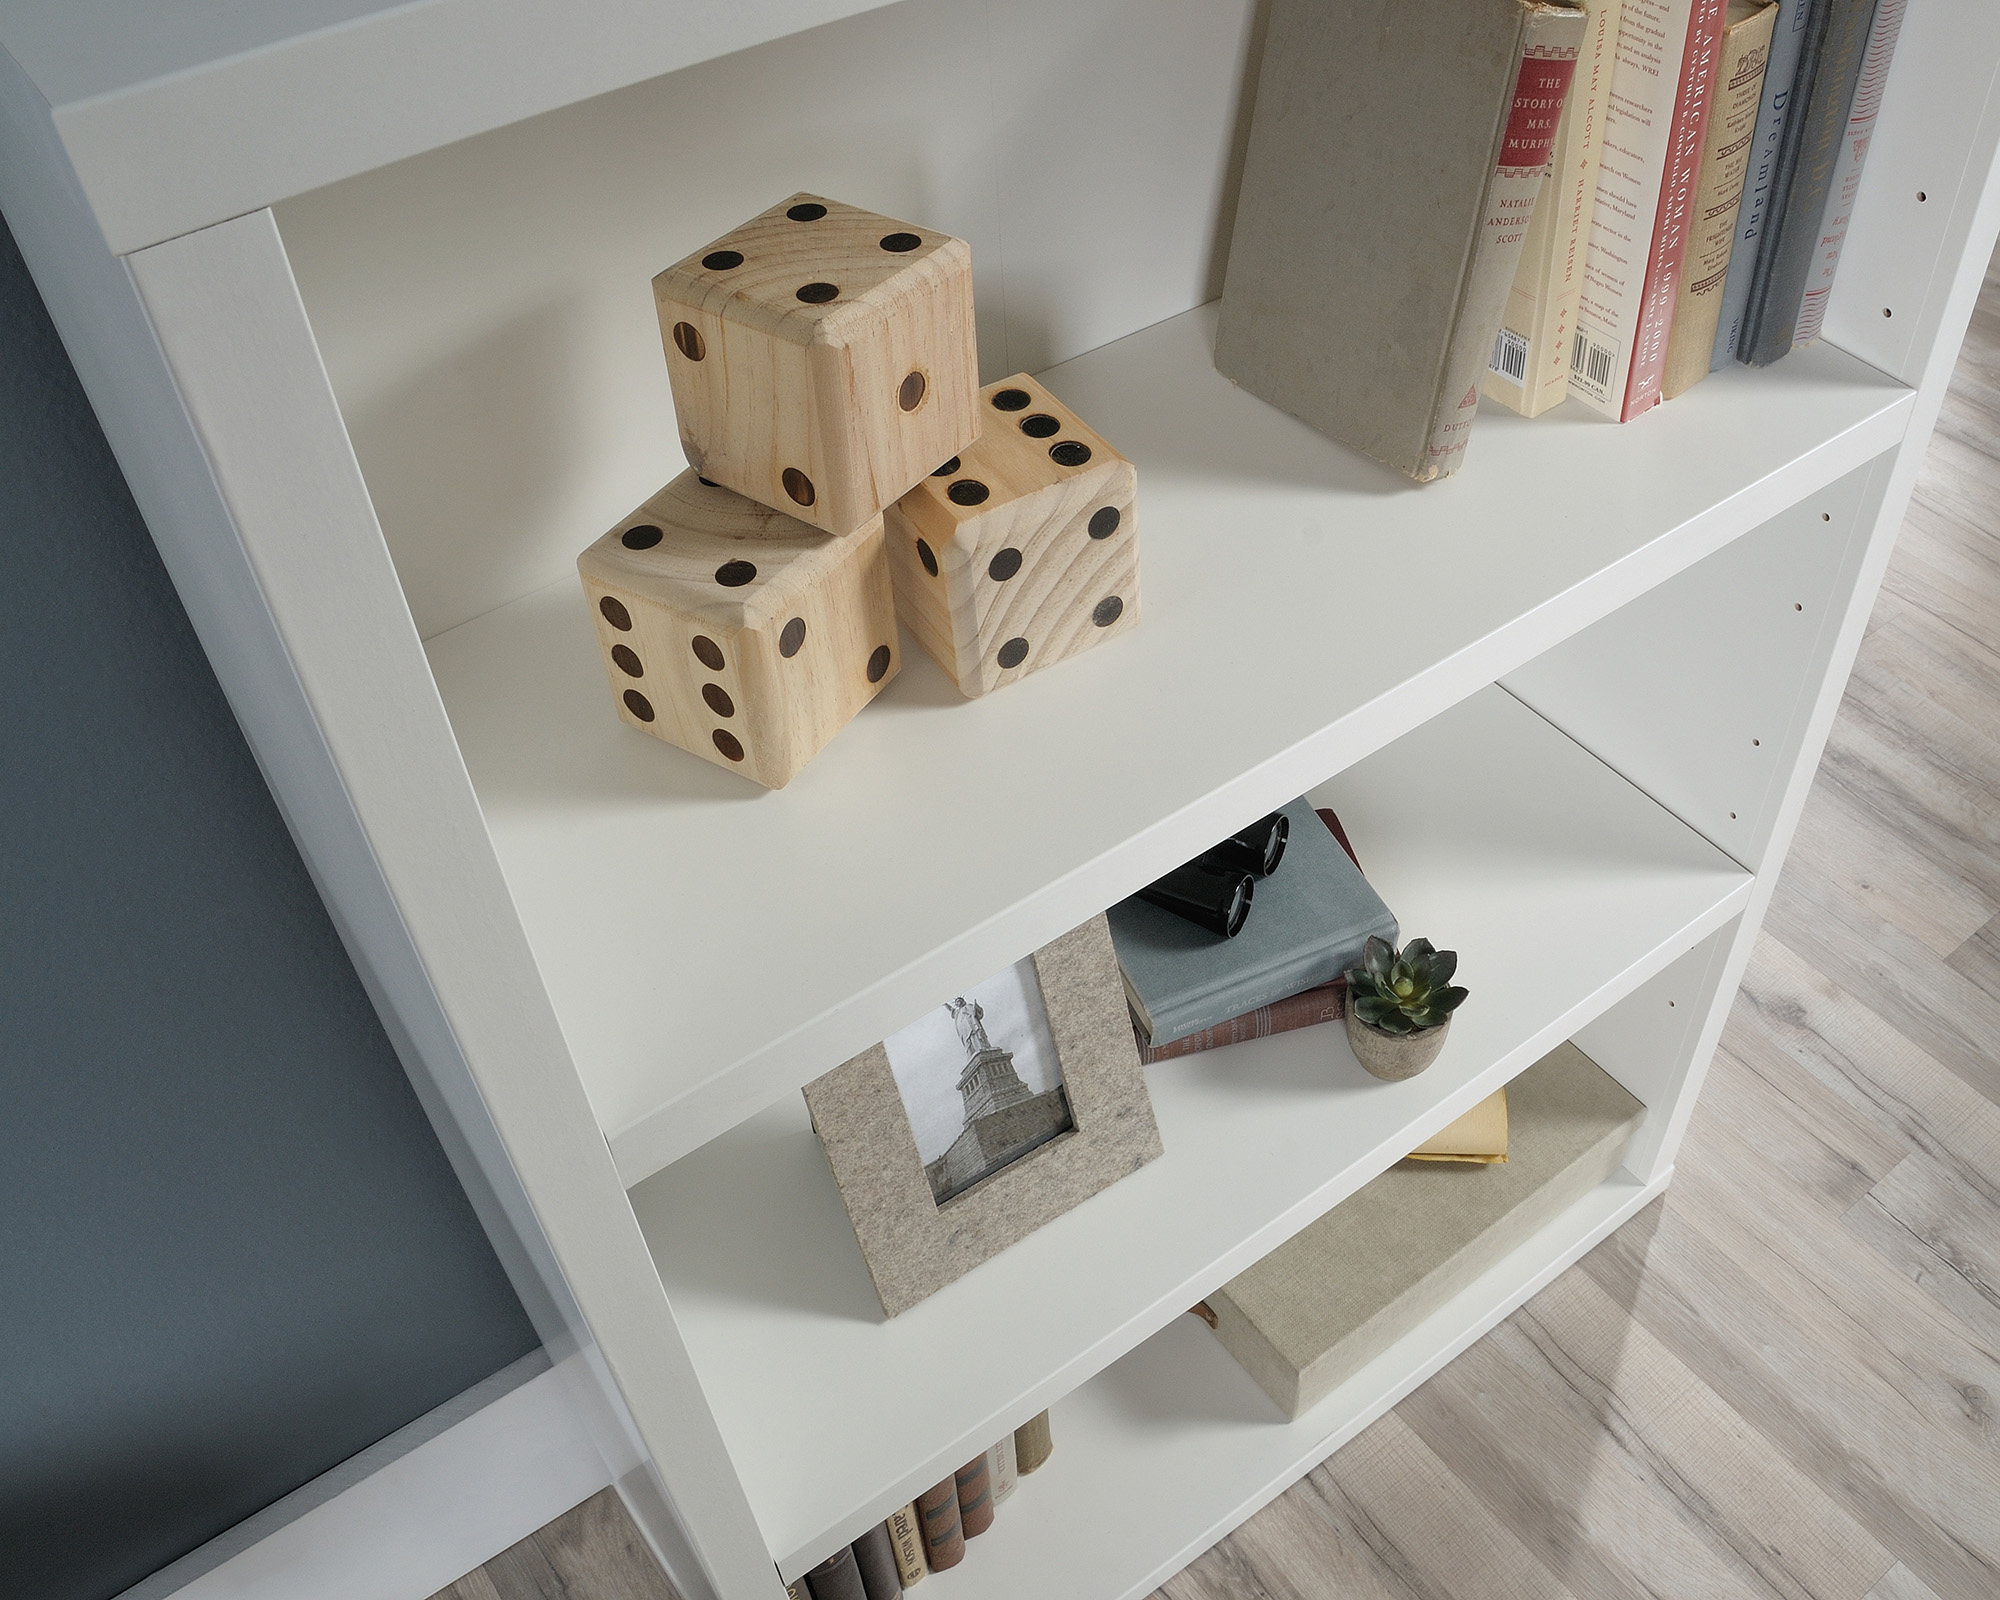 Sauder Select 3-Shelf Bookcase, Soft White® finish (# 427263)